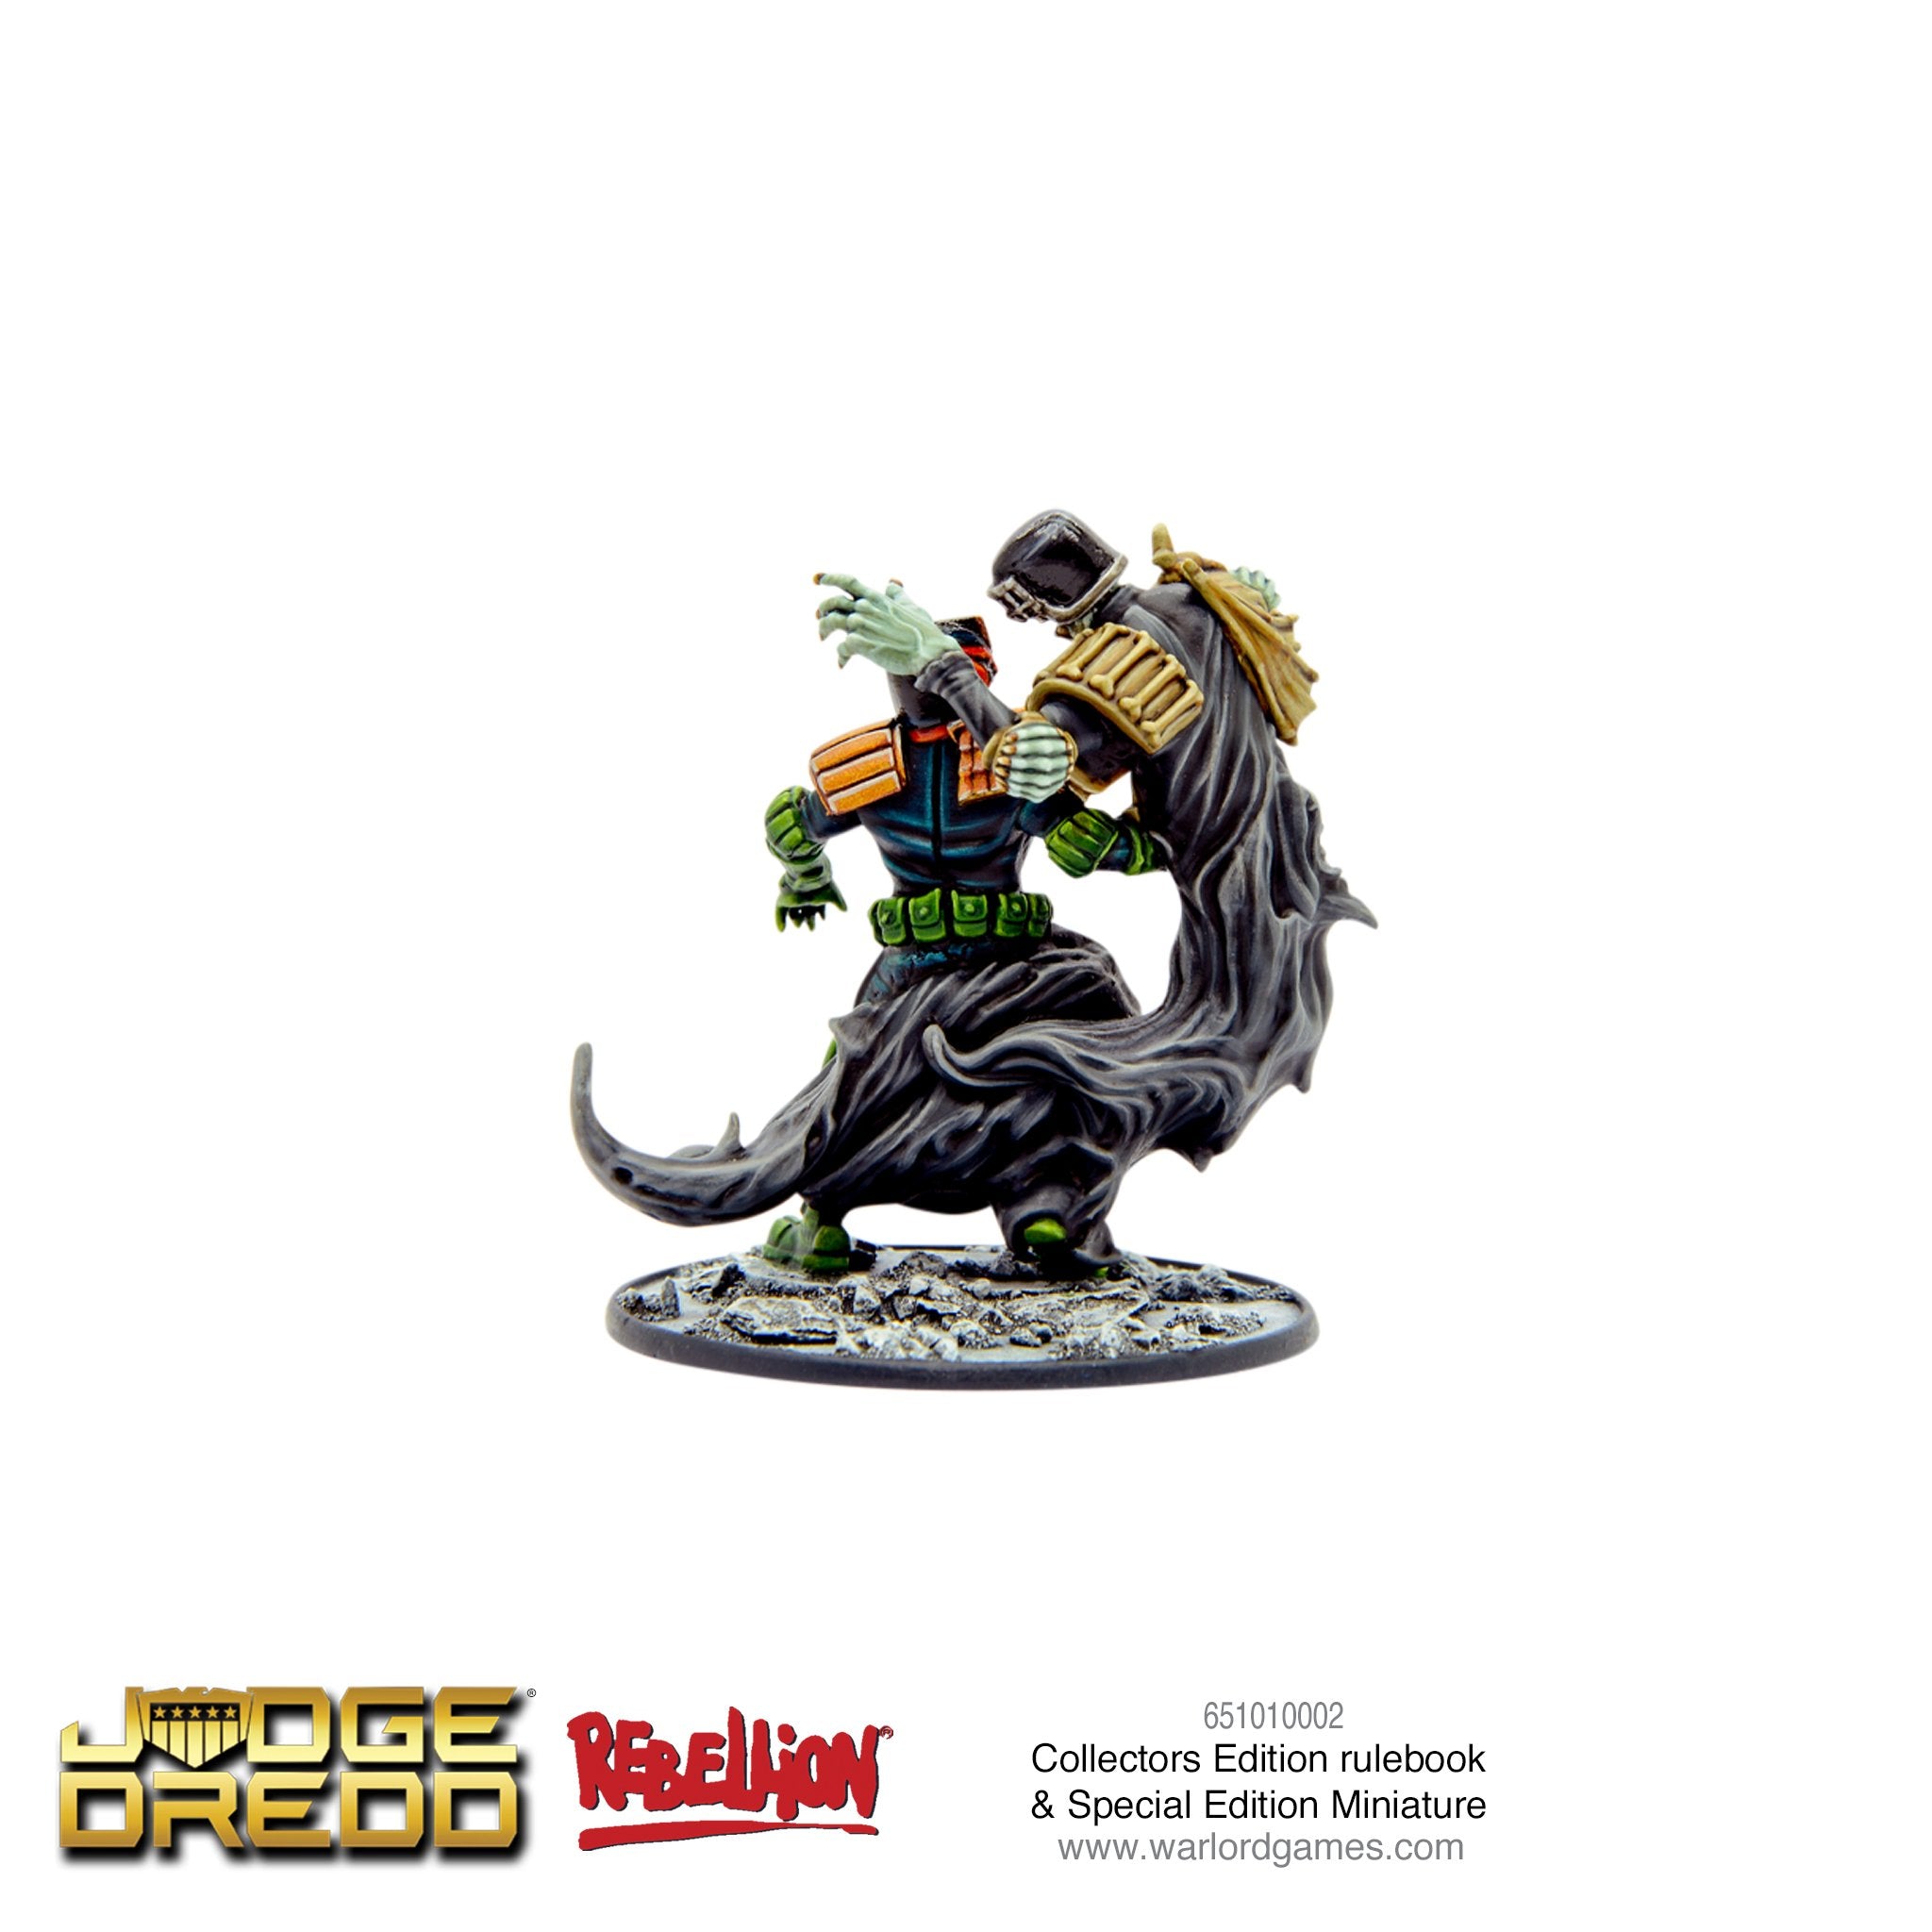 Judge Dredd rulebook - collectors edition and Special Edition Miniature